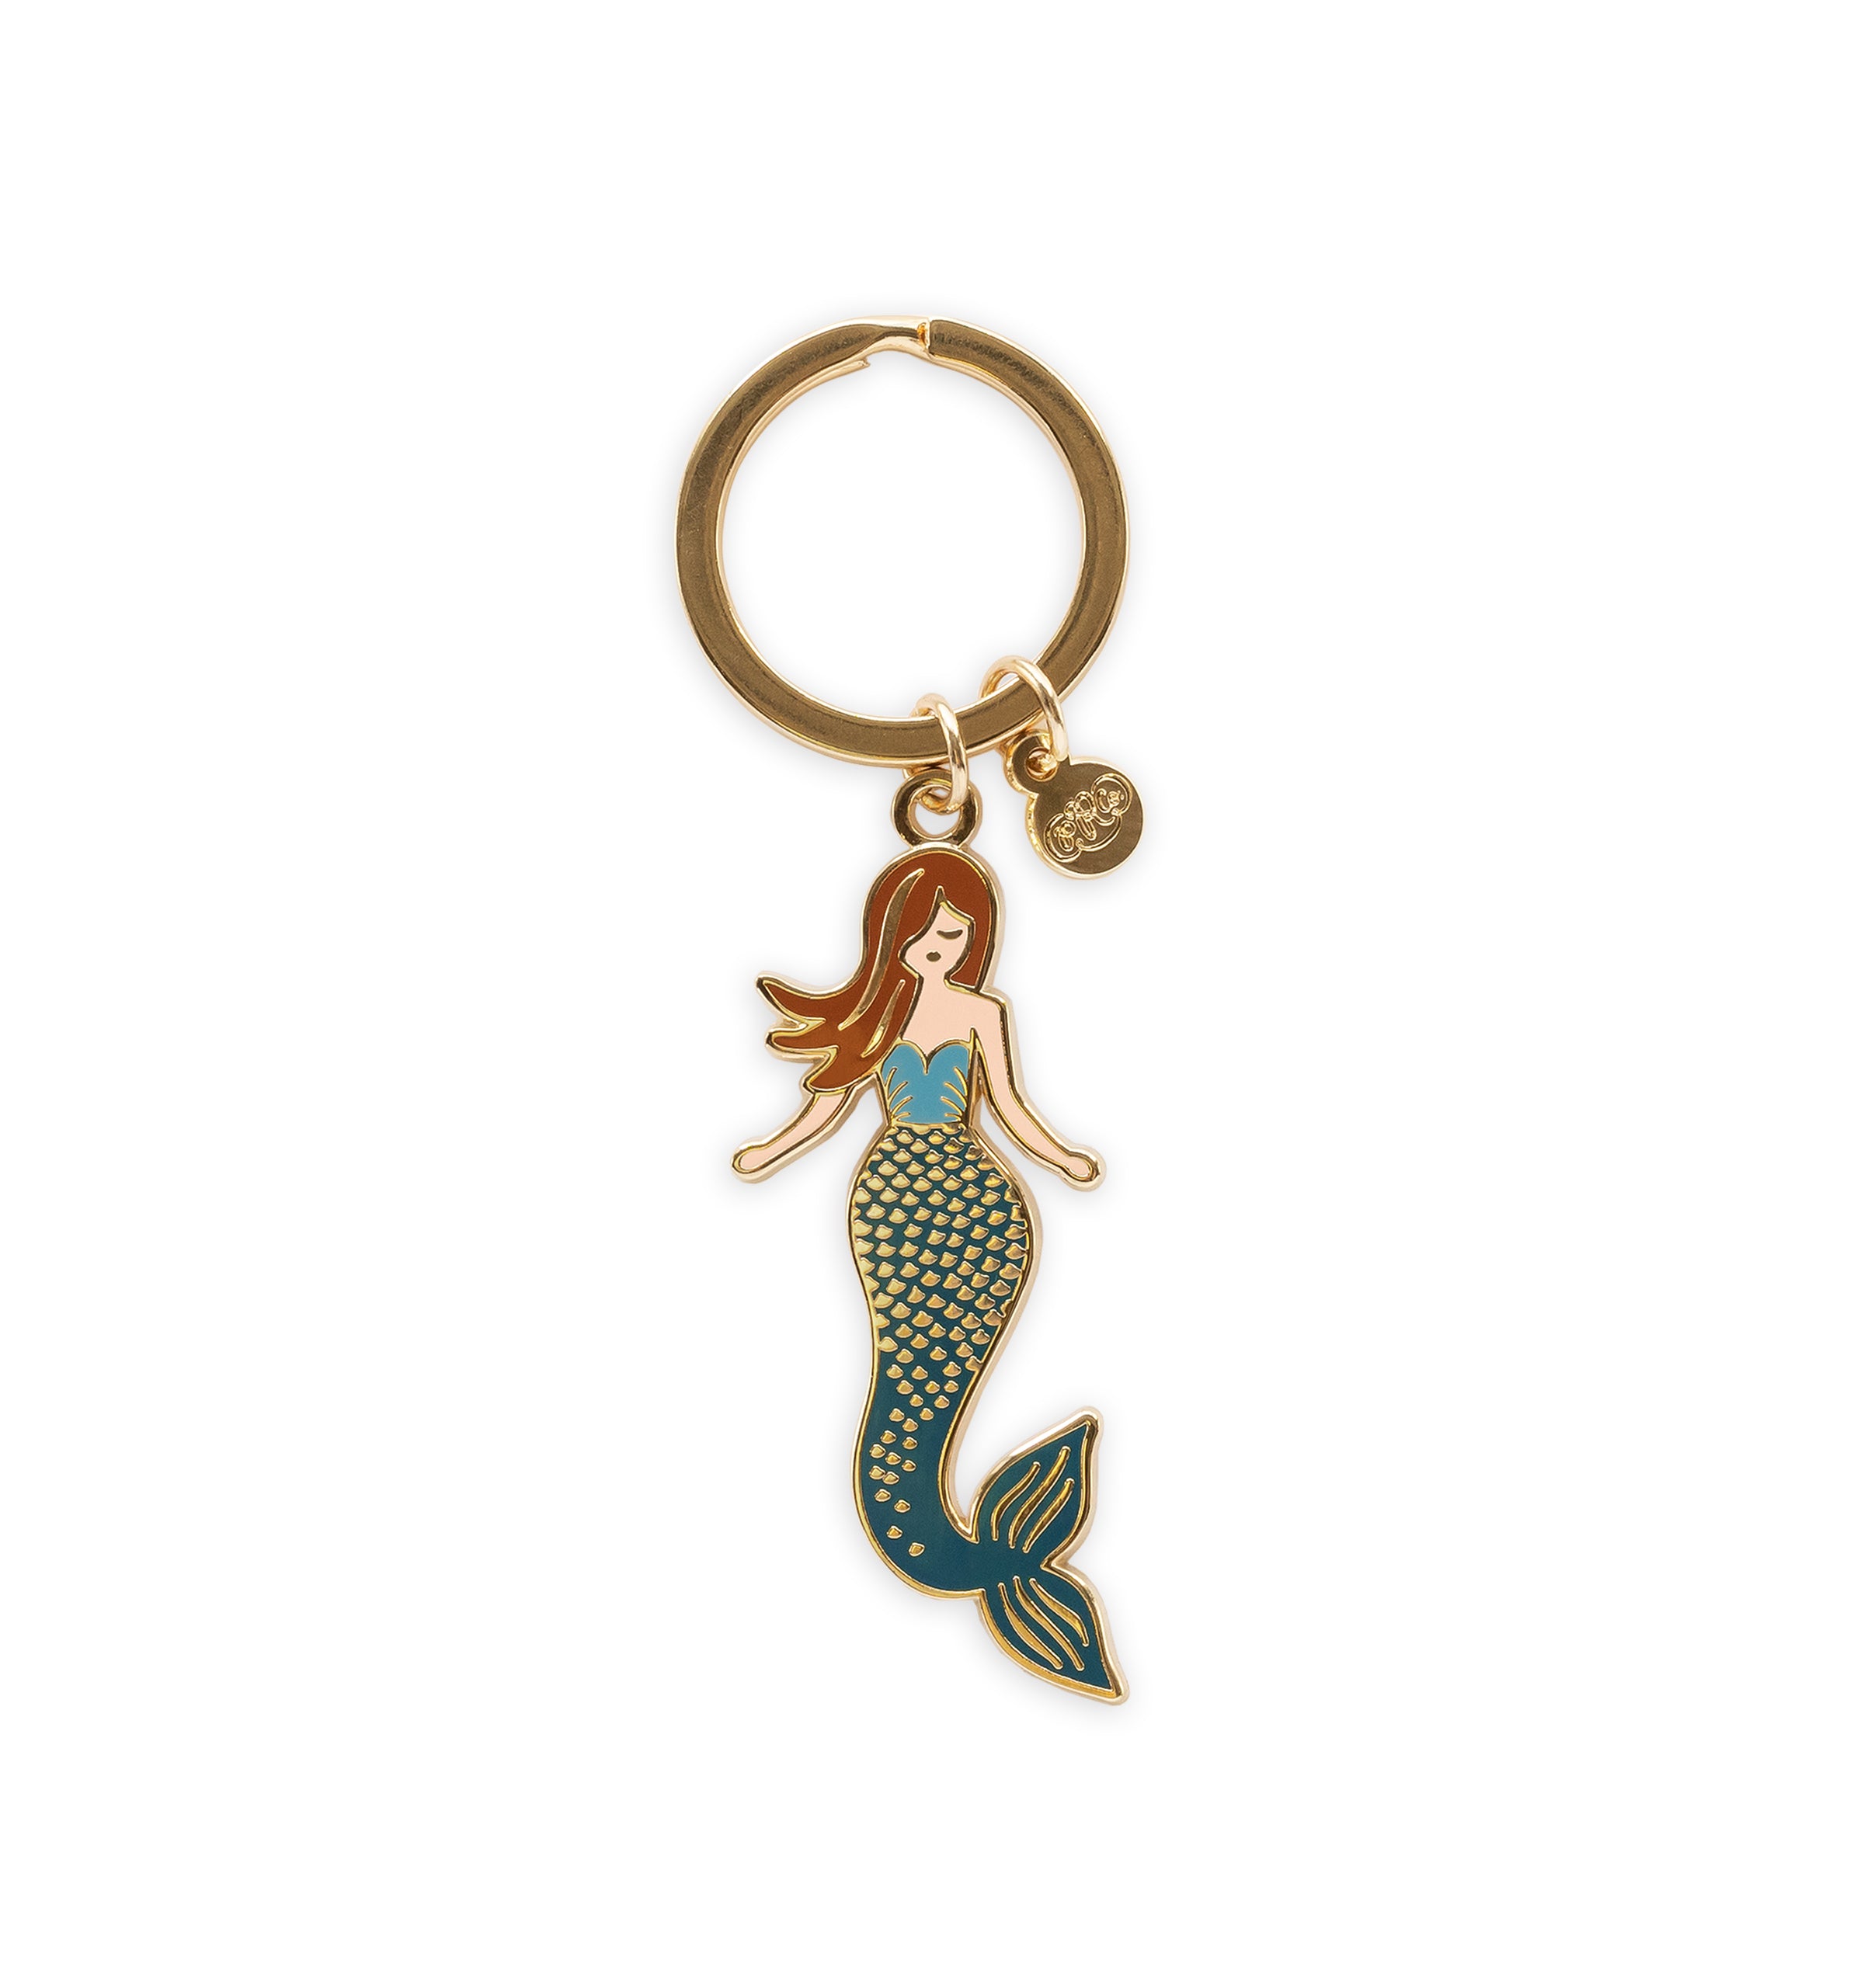 Mermaid Enamel Keychain